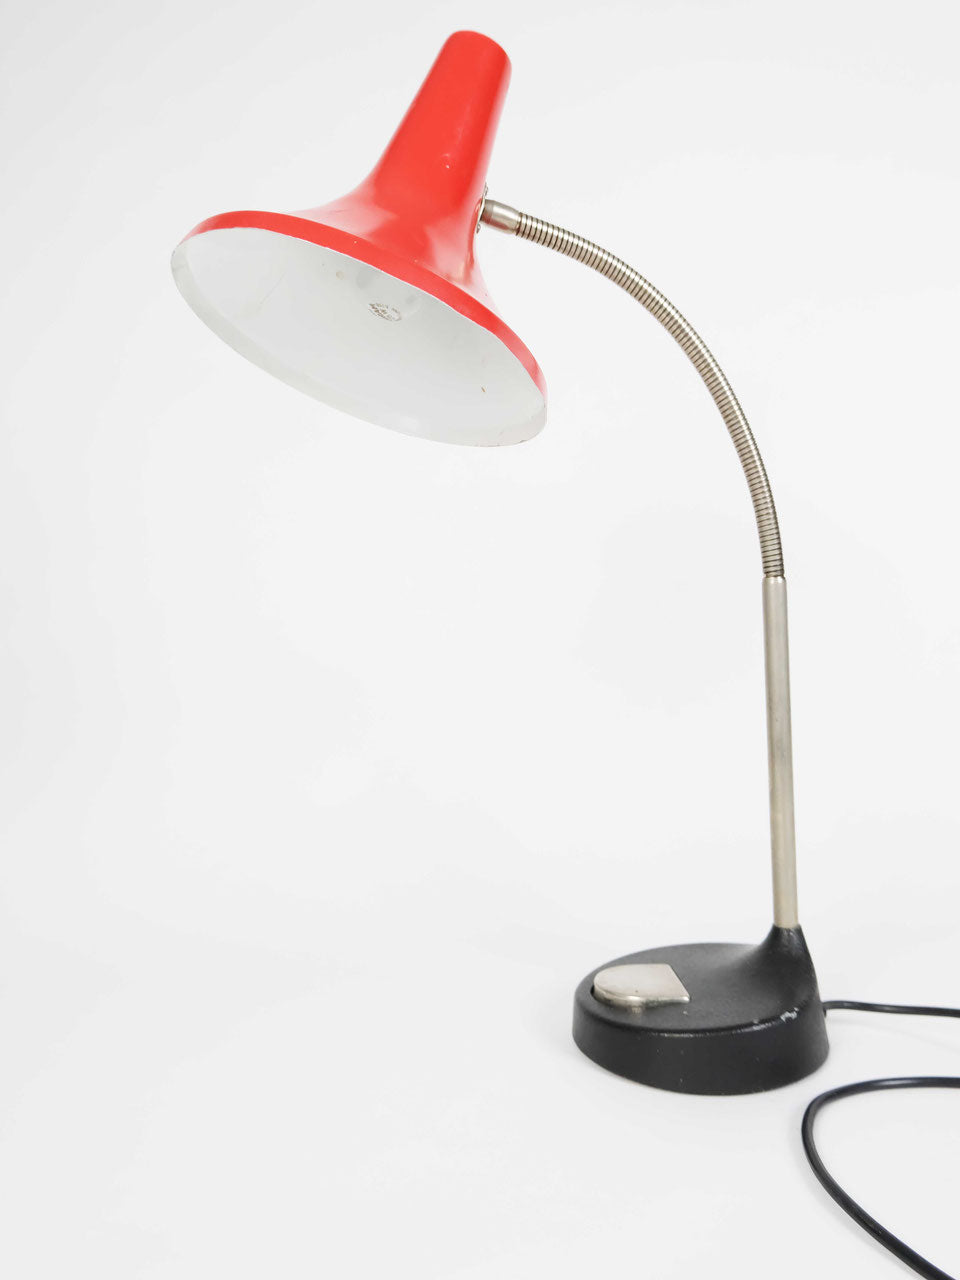 Red desk lamp